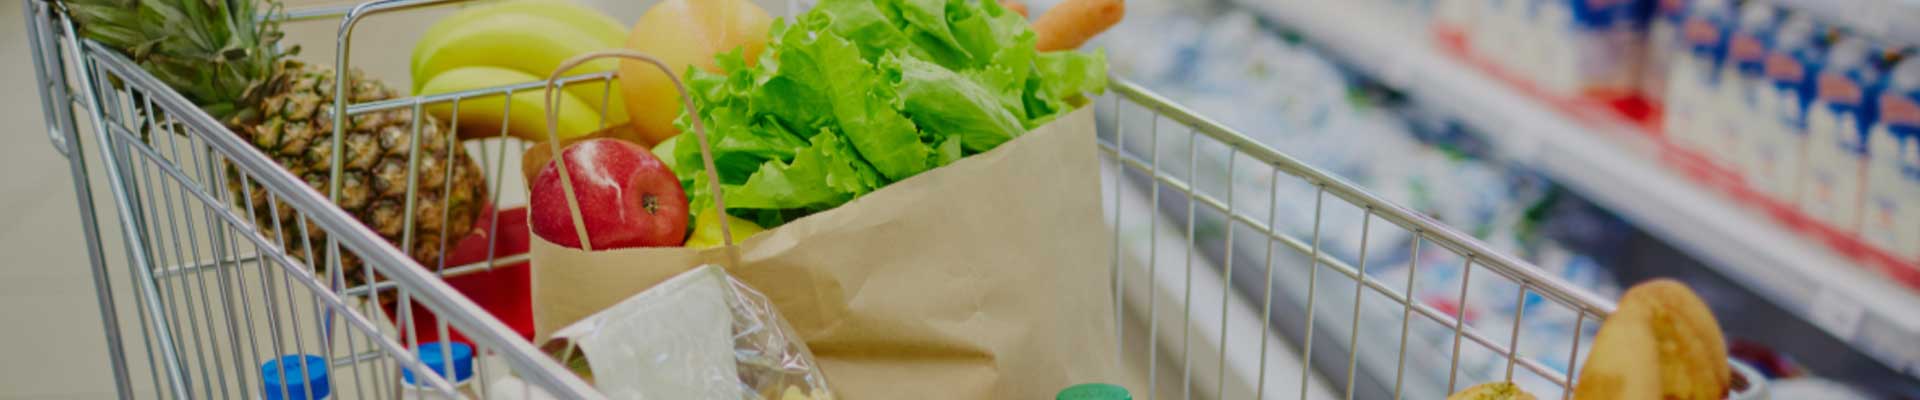 Biodegradable Food Packaging in Restaurant